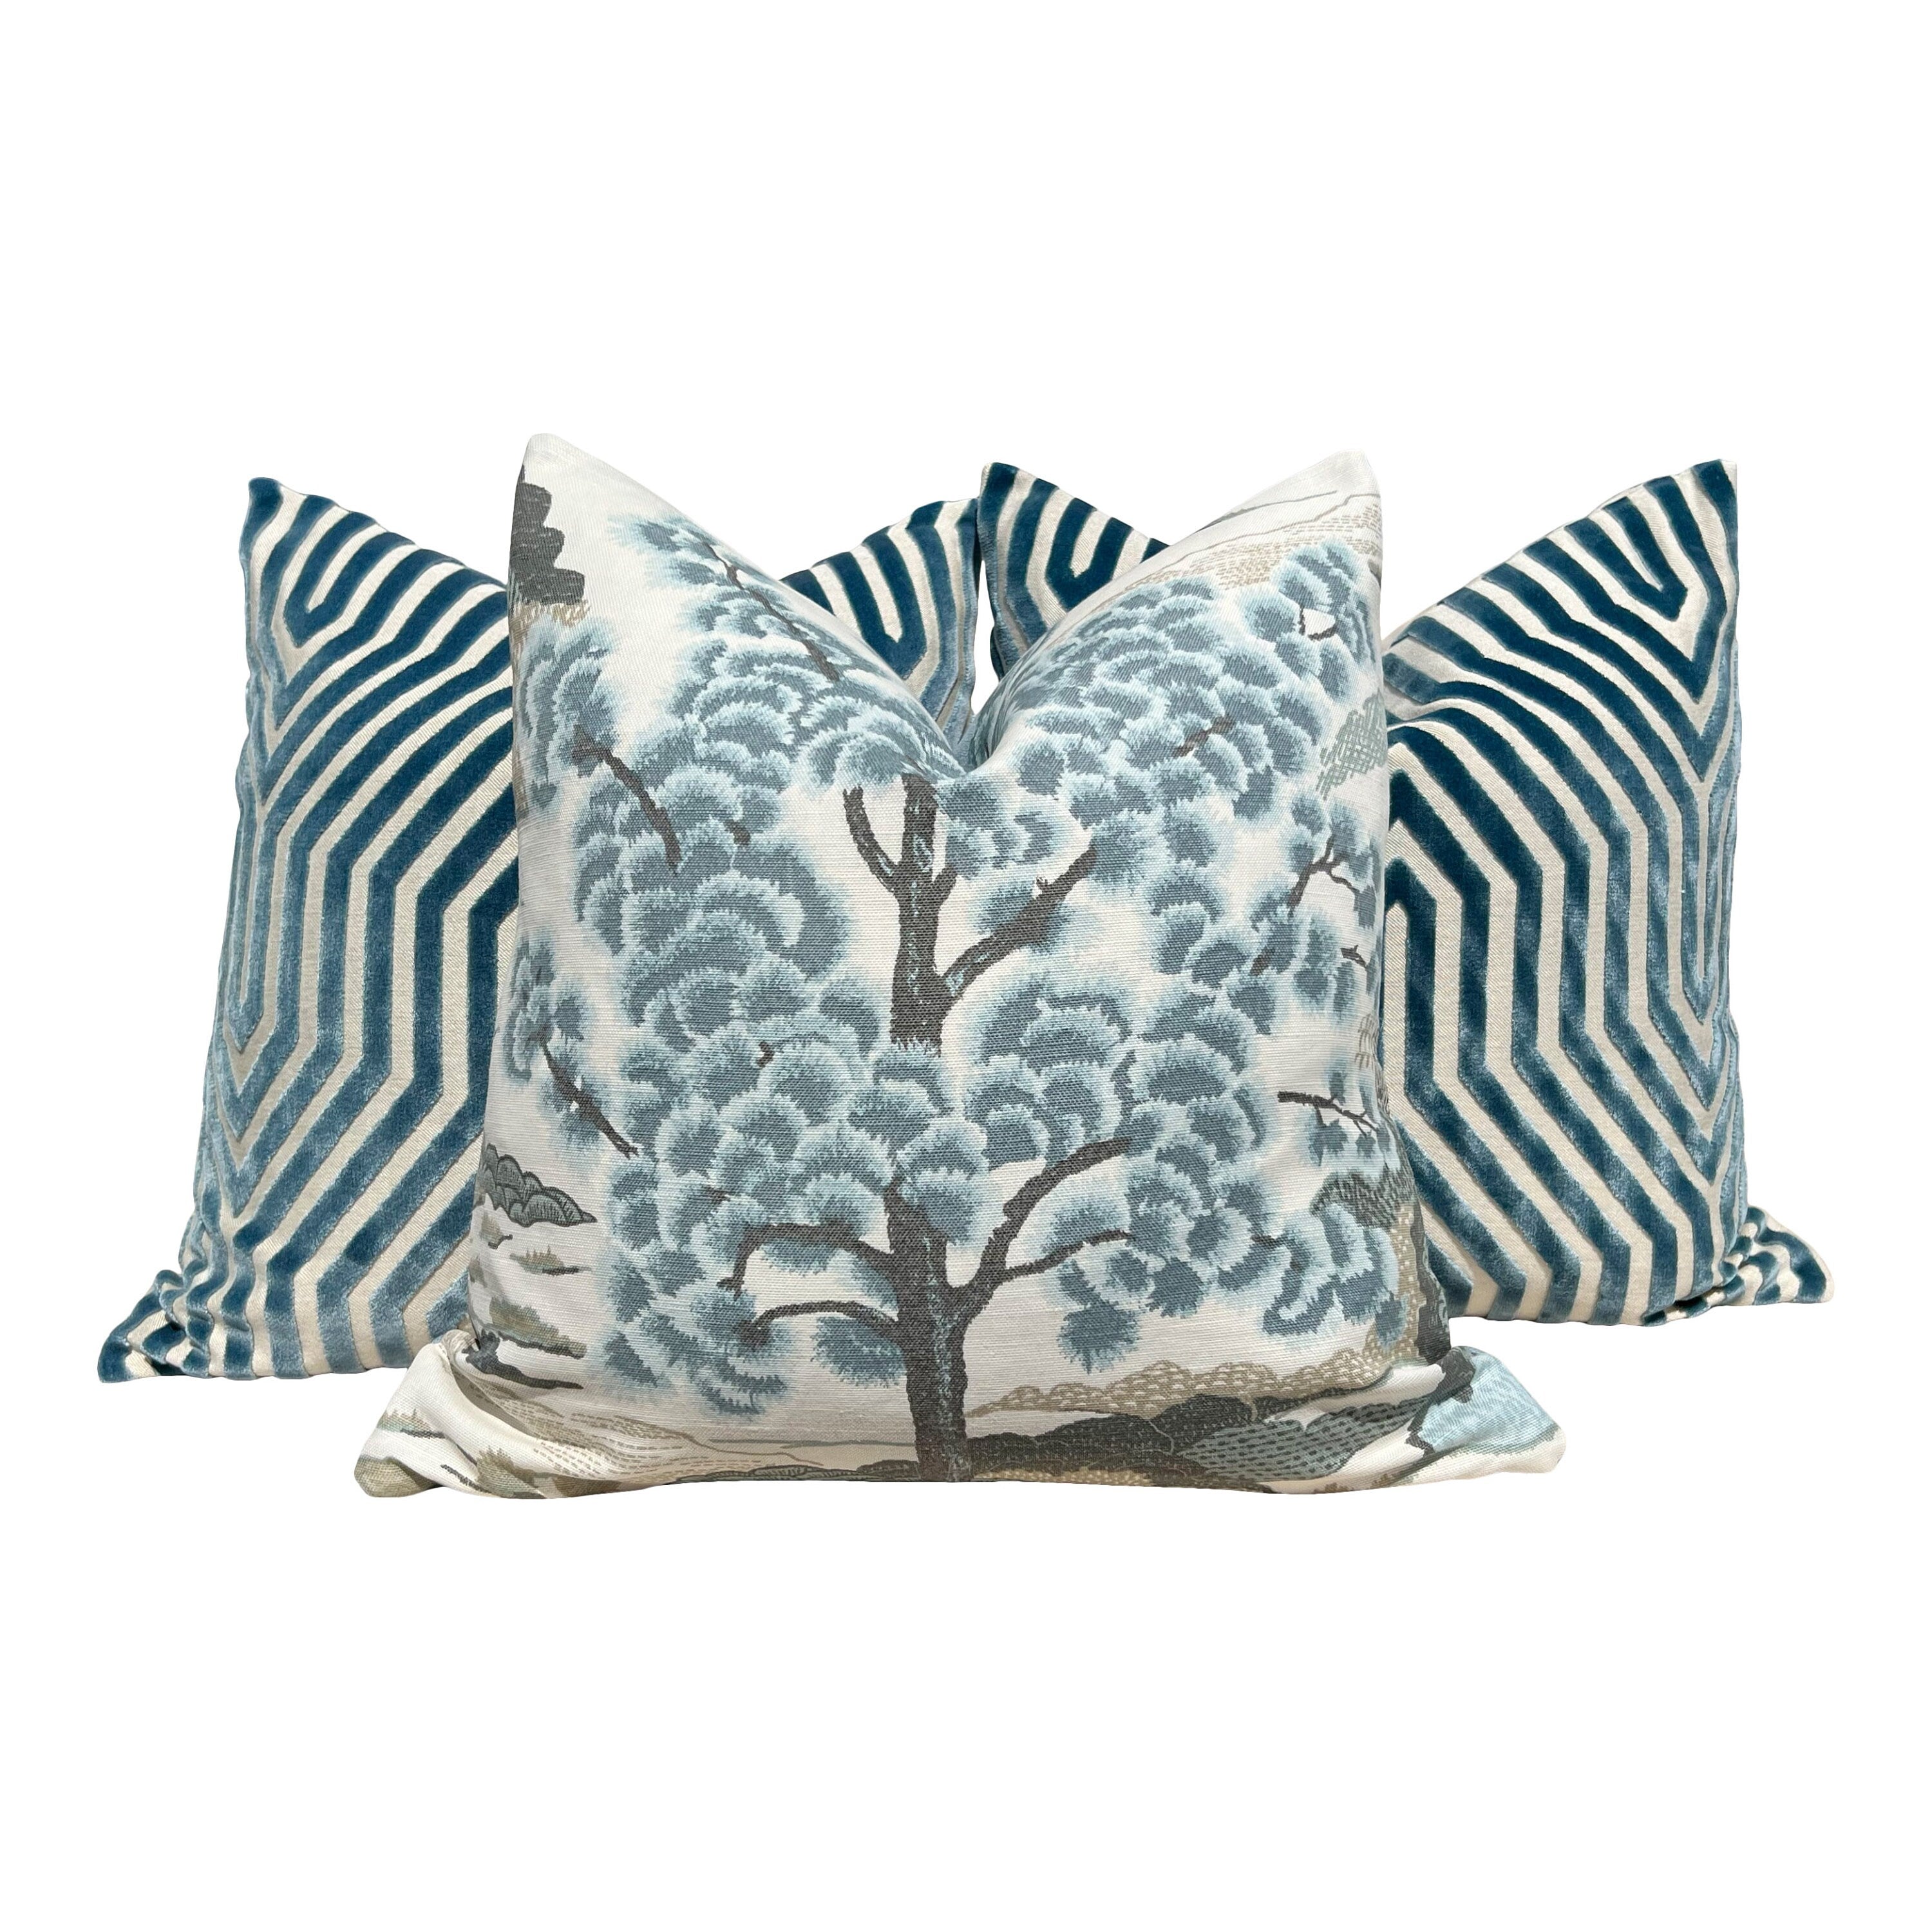 Designer Daintree Decorative Pillow in Aqua. Accent Botanical Pillow cover in Aqua Blue, Euro Sham Cotton Linen Cushion Case with Zipper